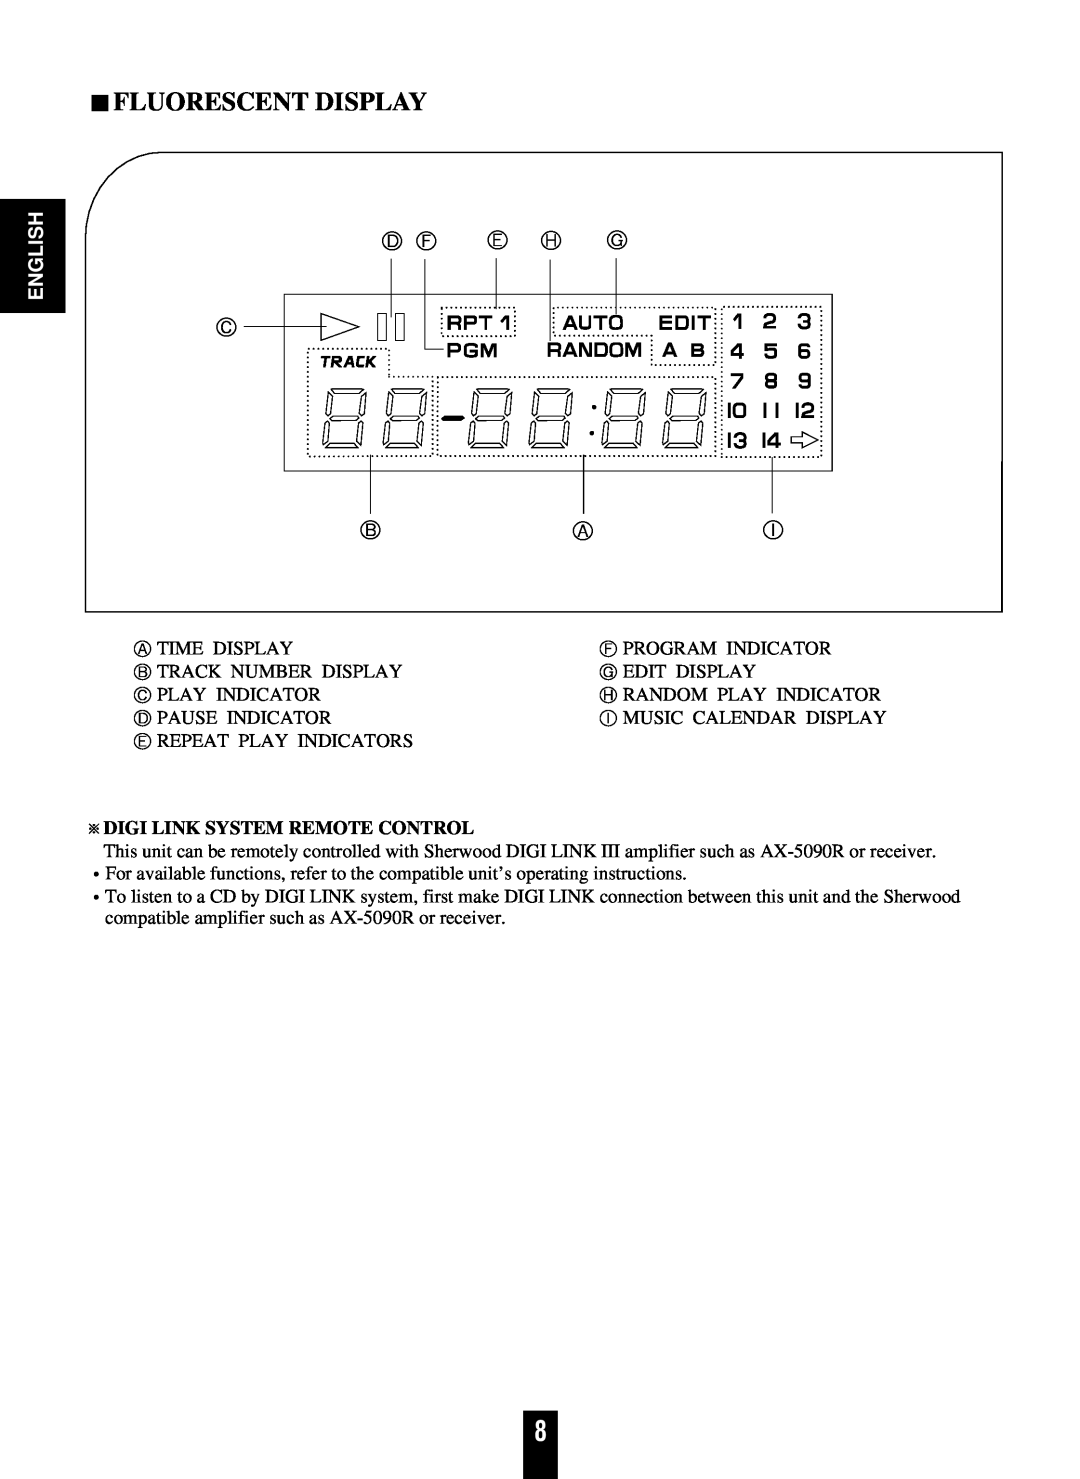 Sherwood CD-5090C/R operating instructions Fluorescent Display, Digi Link System Remote Control, English 